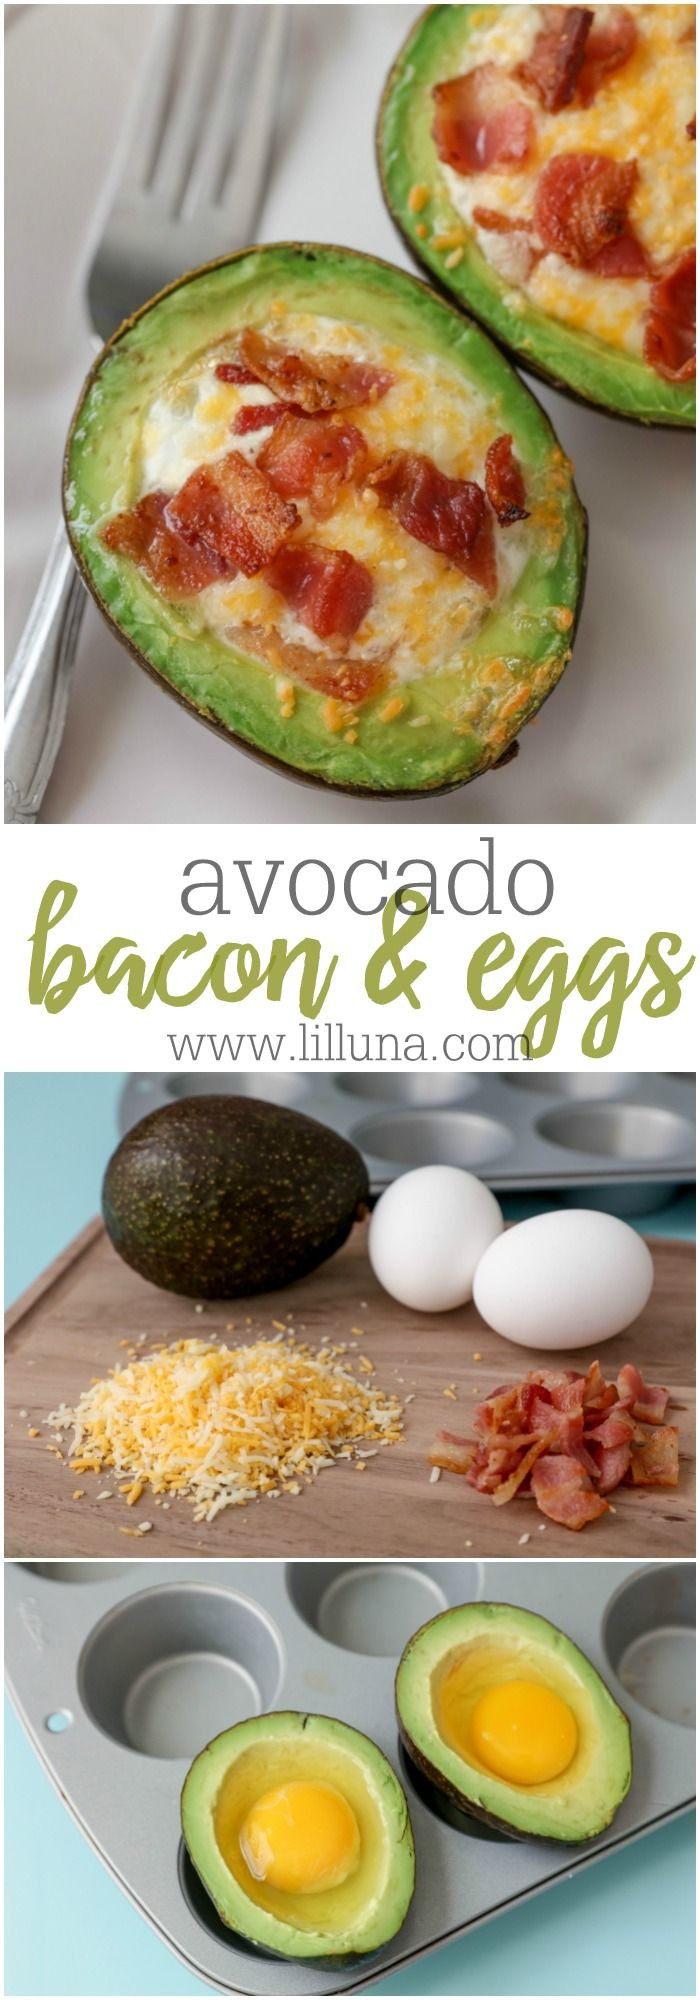 Healthy Fats For Breakfast
 25 best ideas about Avocado on Pinterest